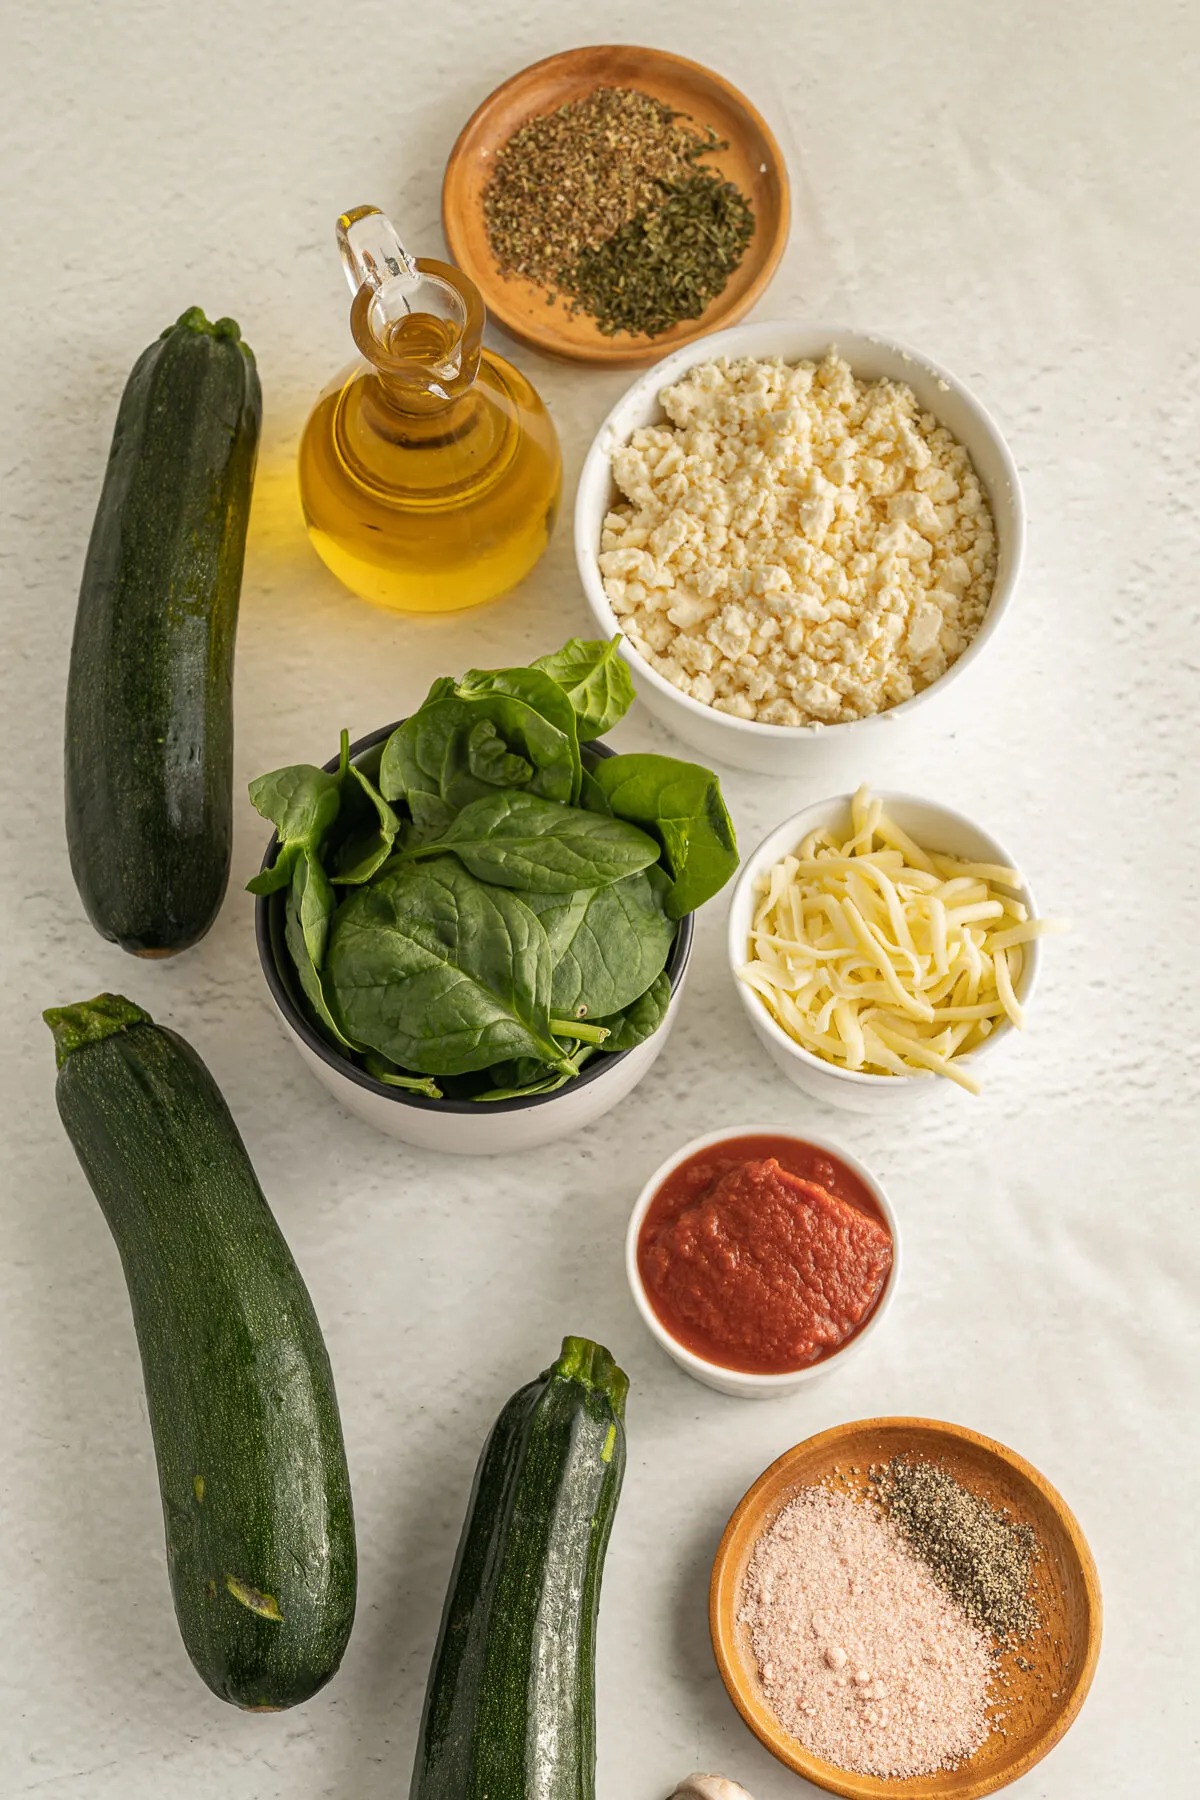 Ingredients for Zucchini Ravioli